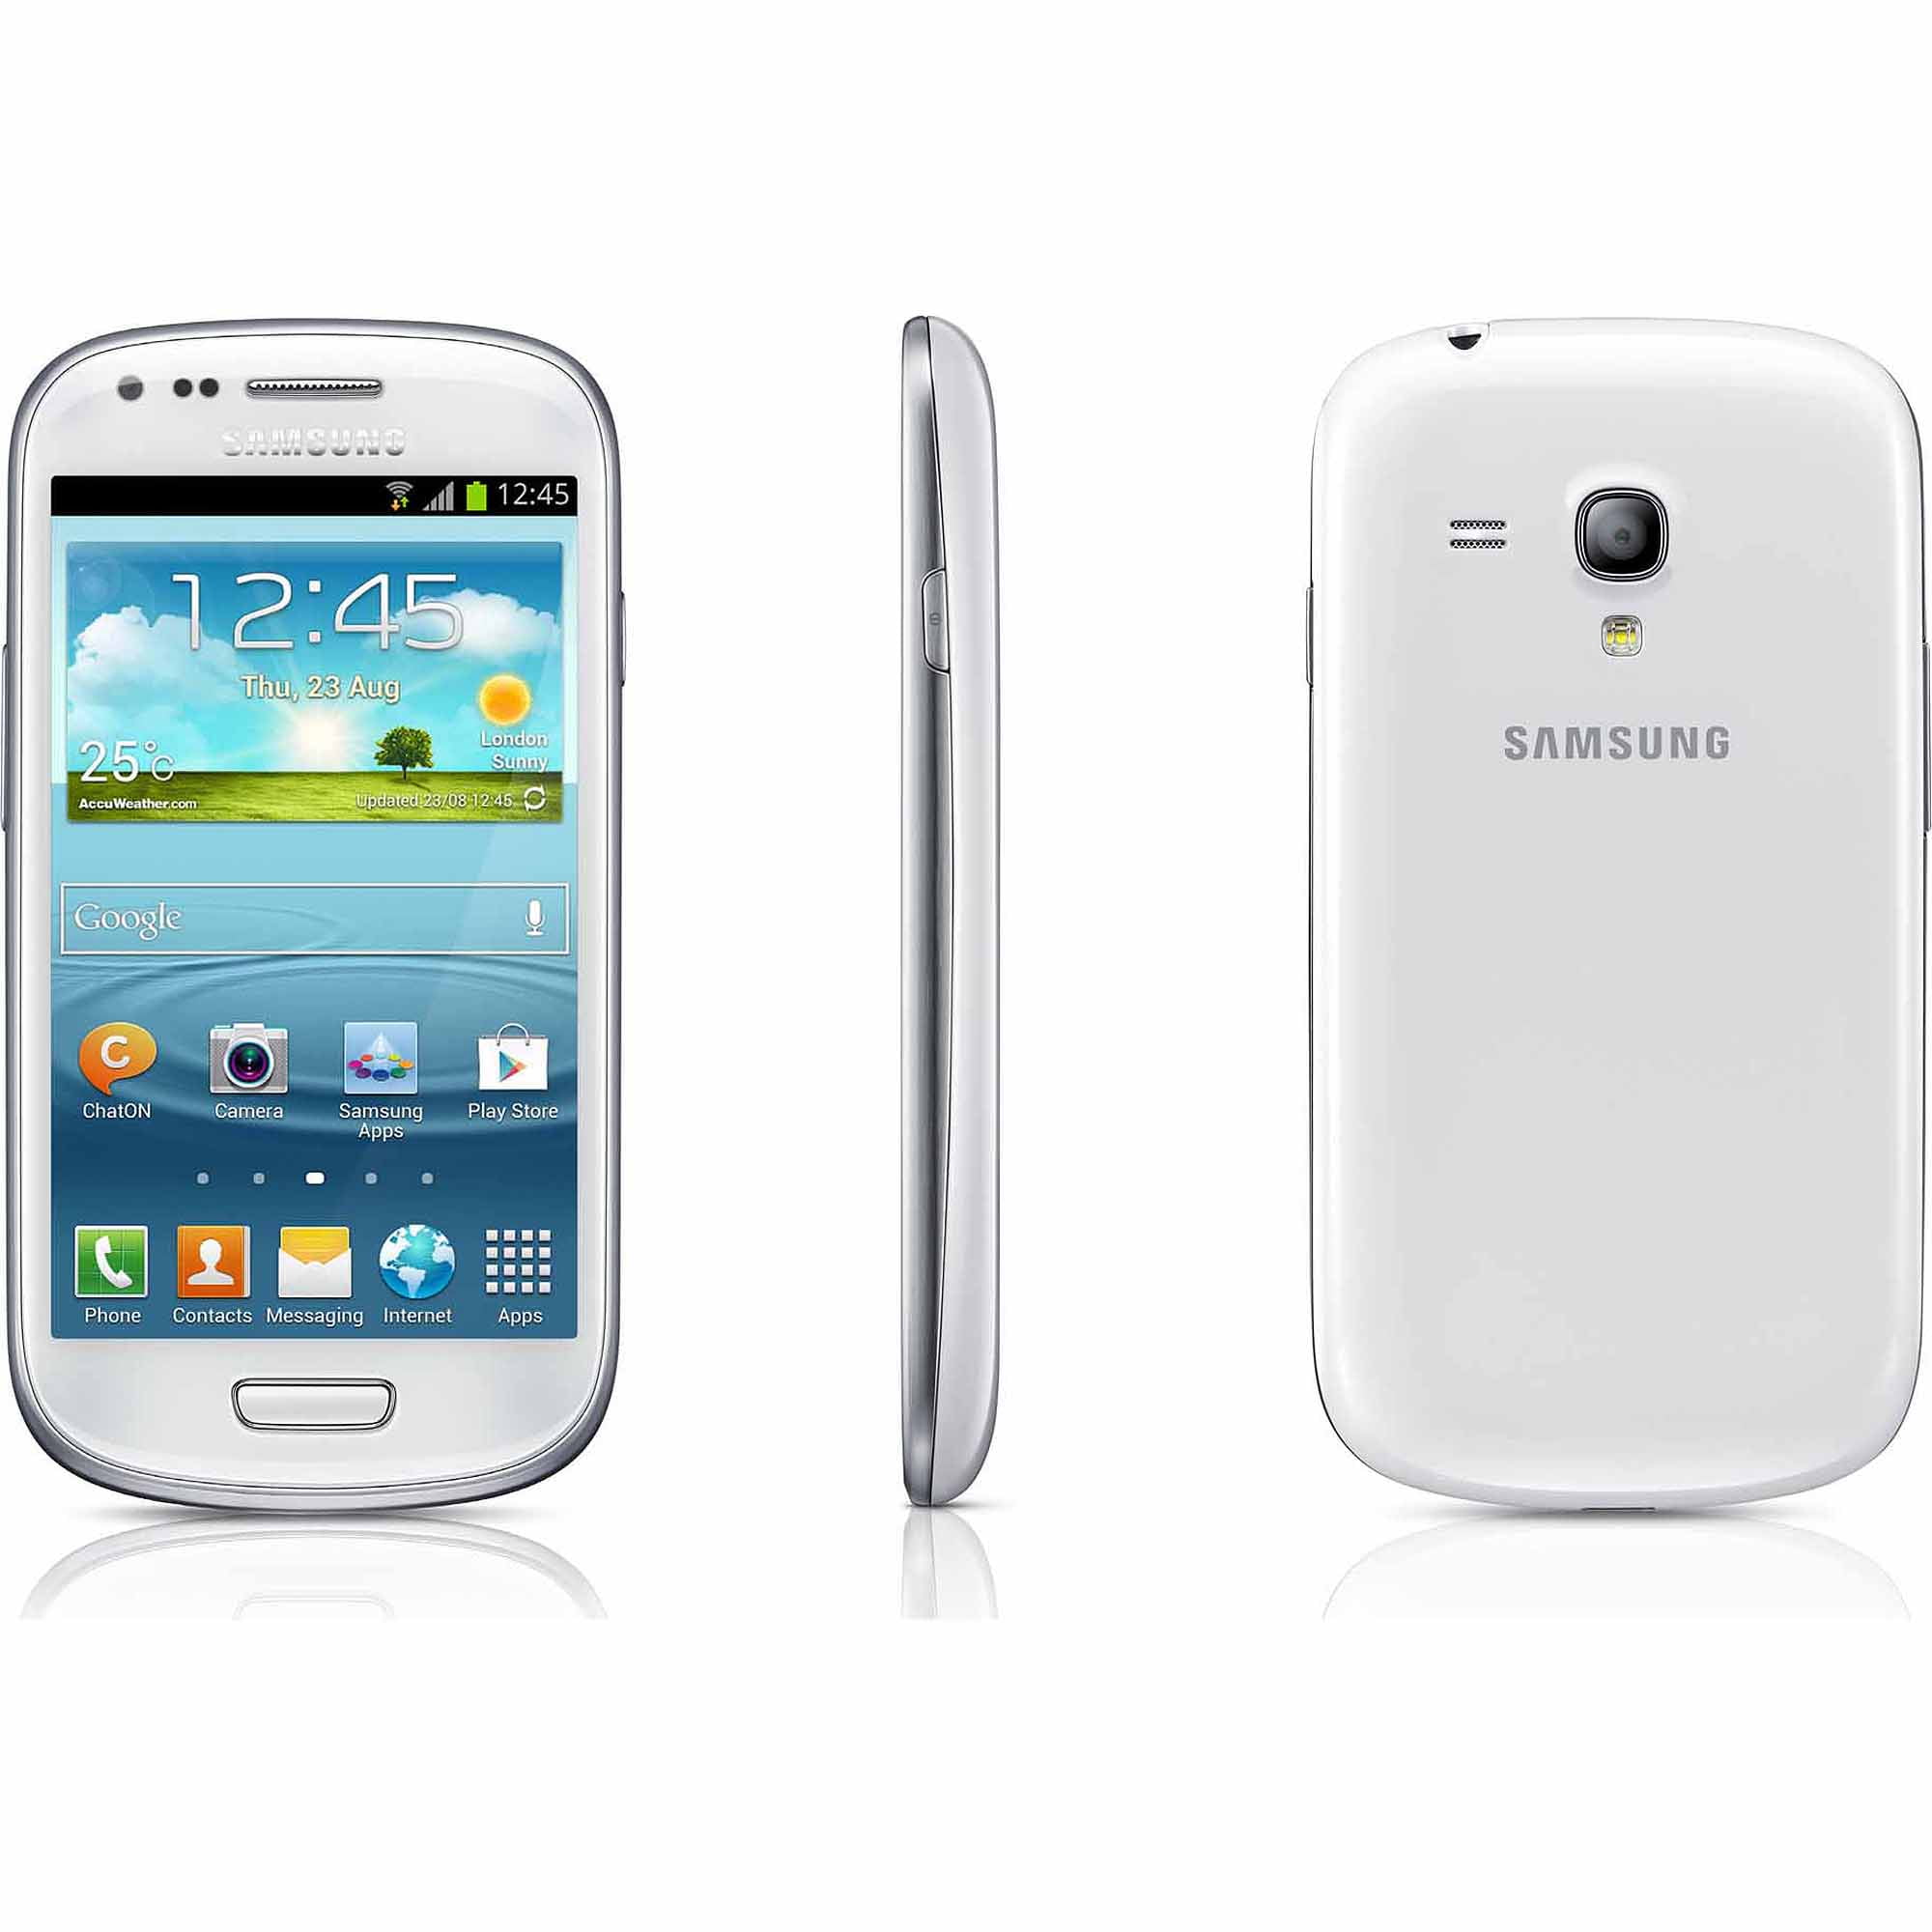 admire Peculiar Bridge pier Samsung Galaxy 18200 S3 mini Value Edition Smartphone (Unlocked), White -  Walmart.com